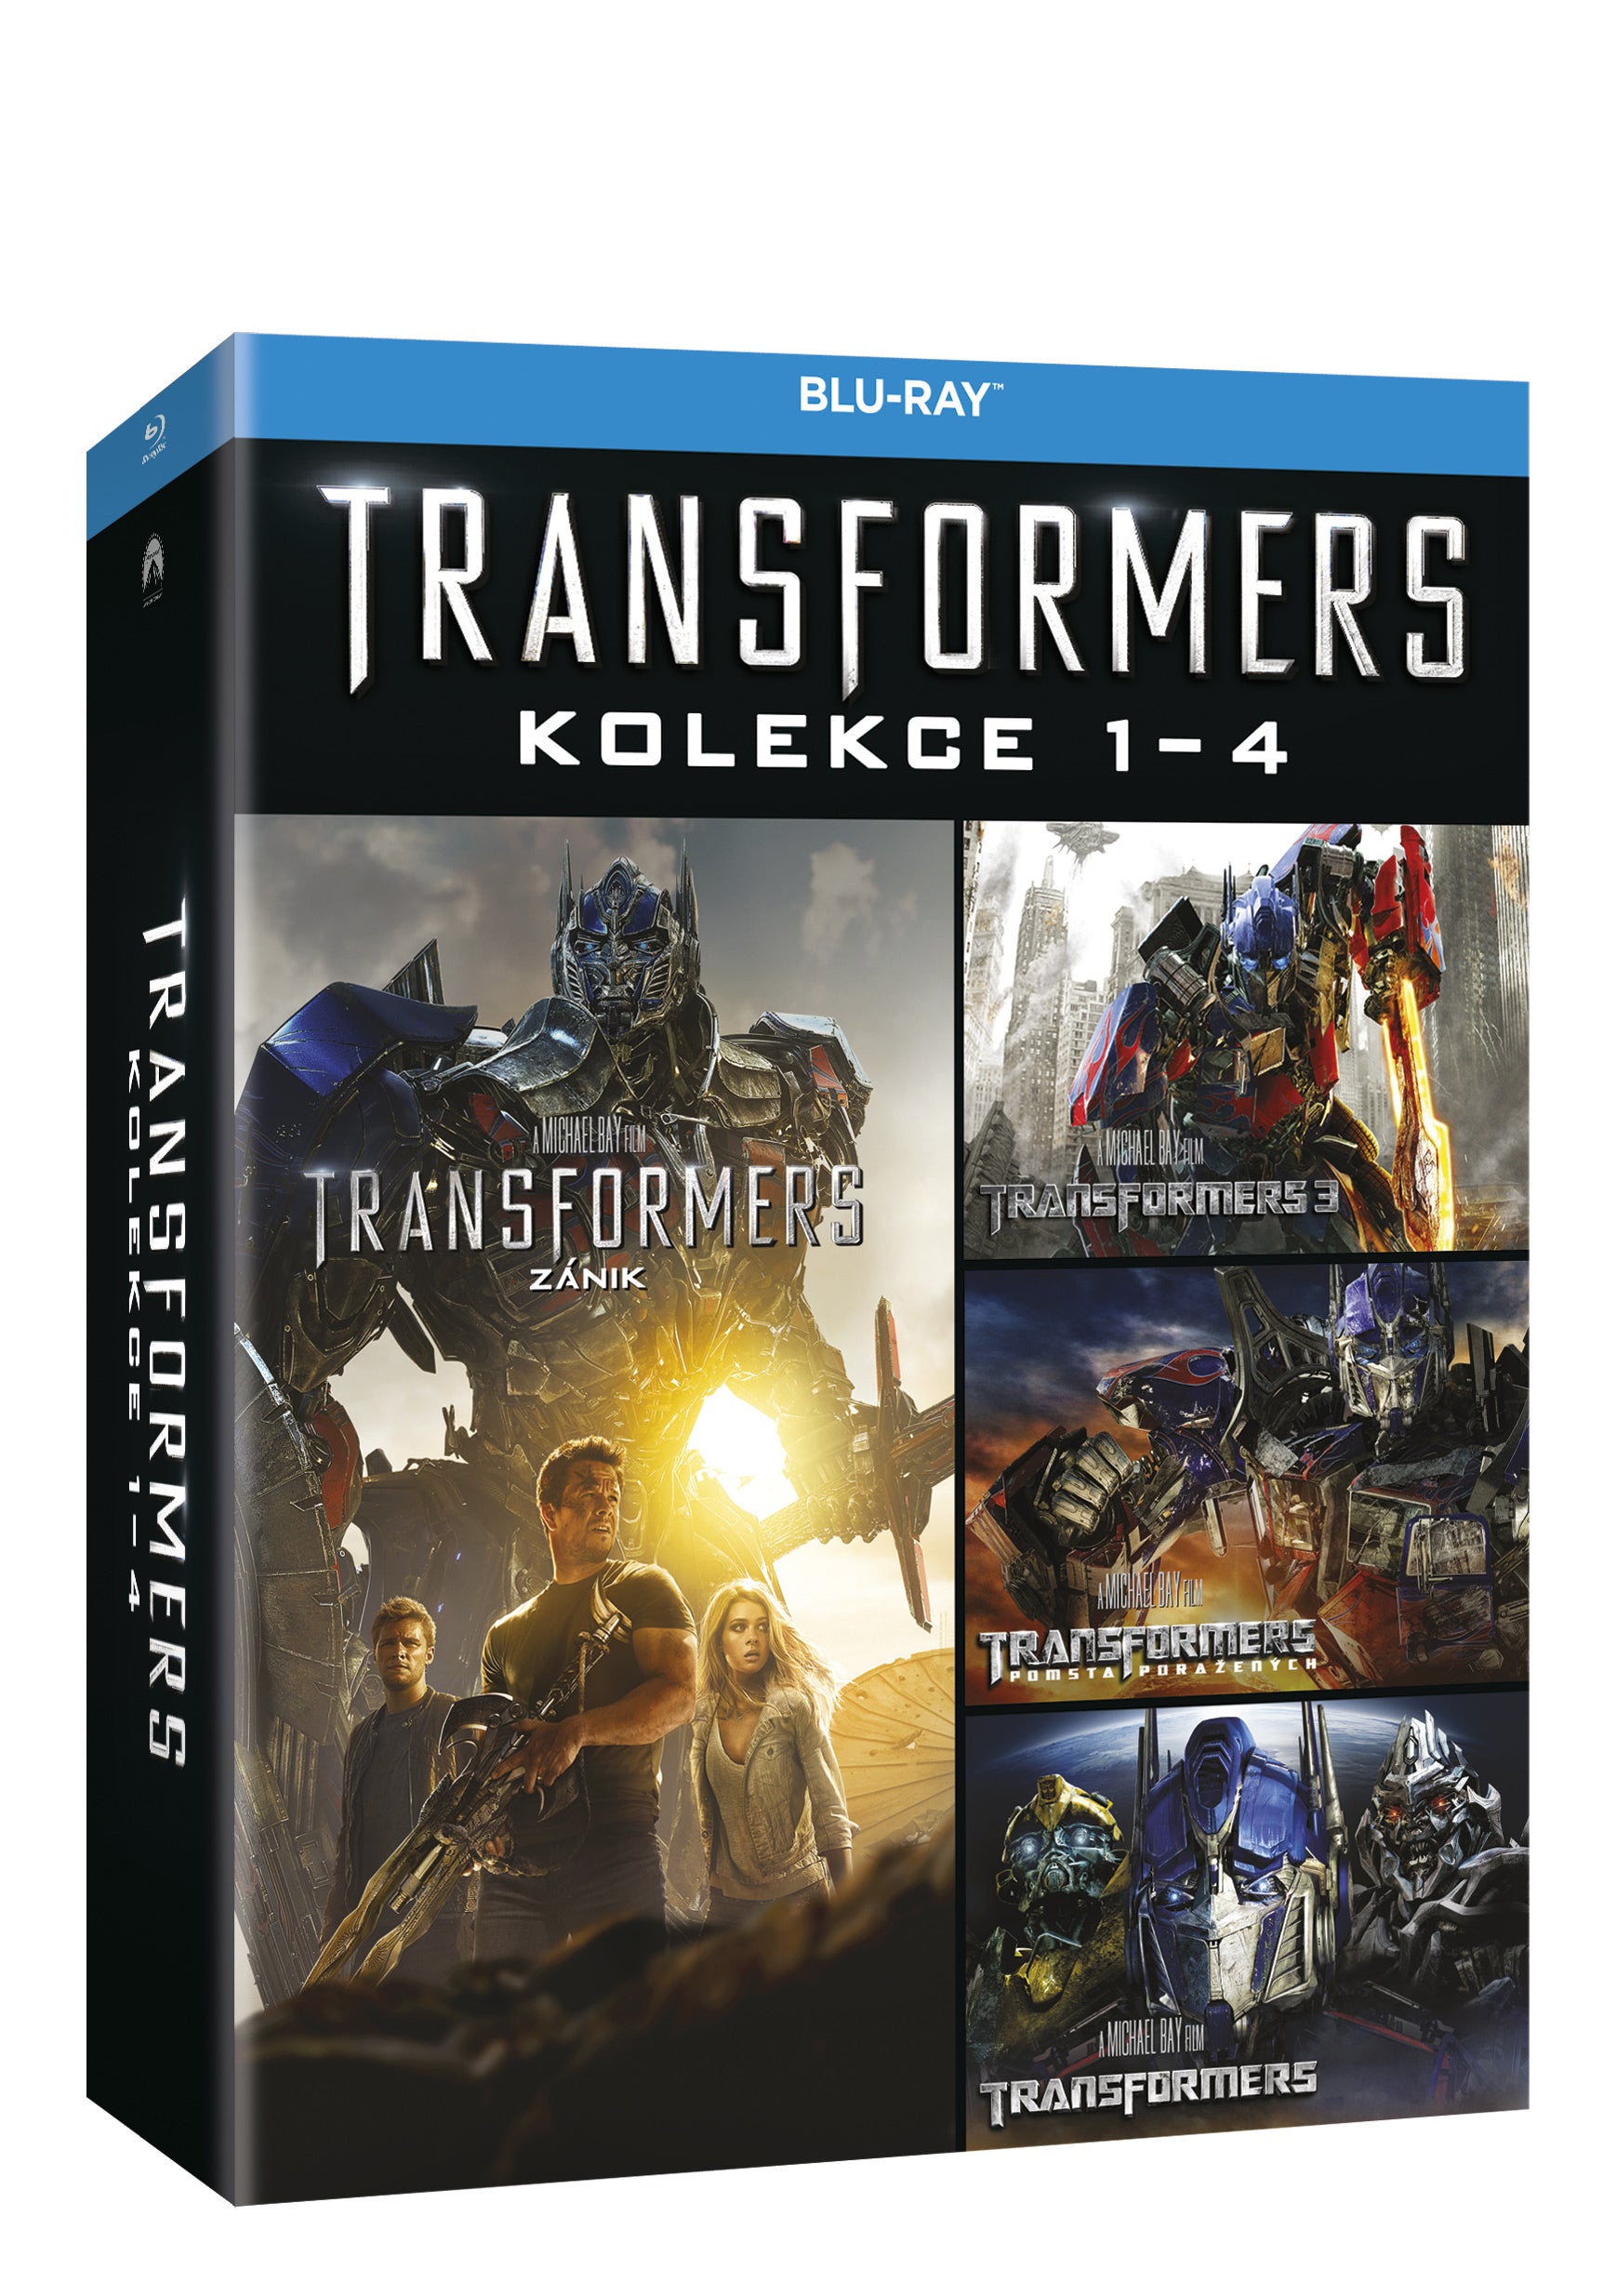 Transformers kolekce 1-4 5BD / Transformers 4-movie set - Czech version